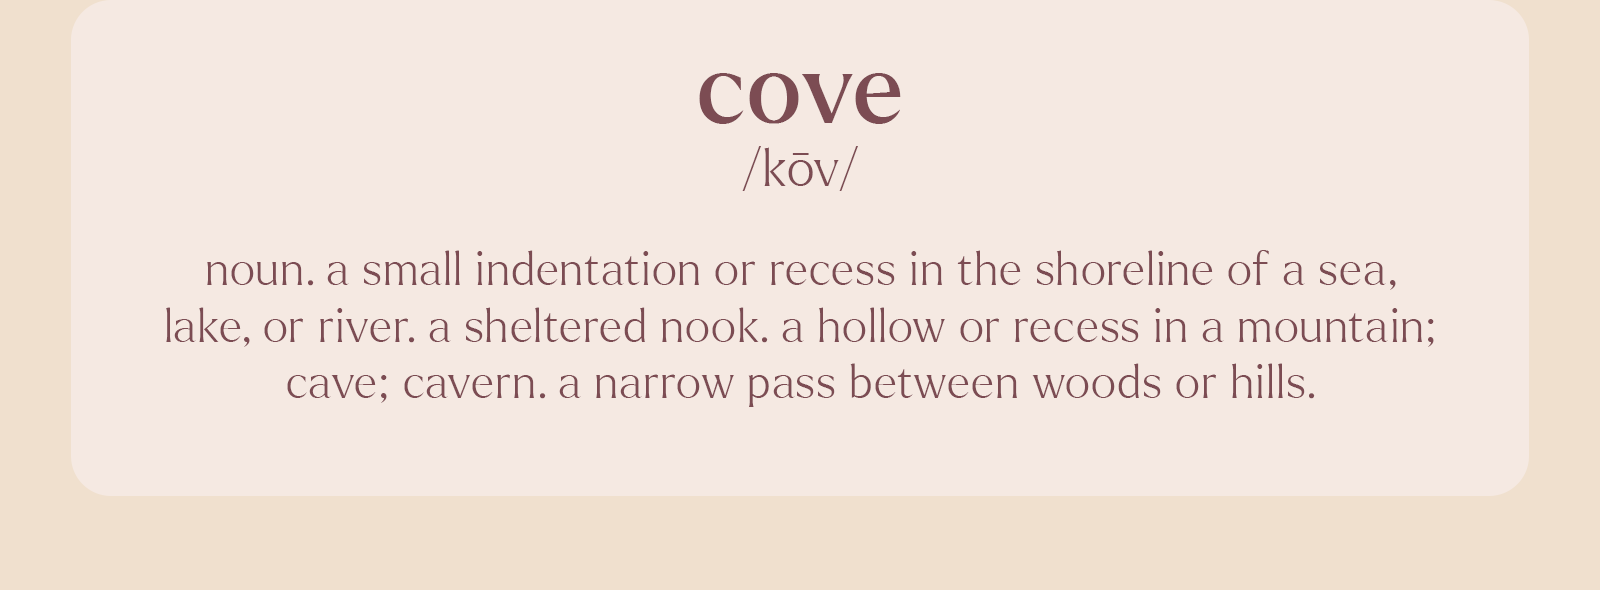 cove definition 